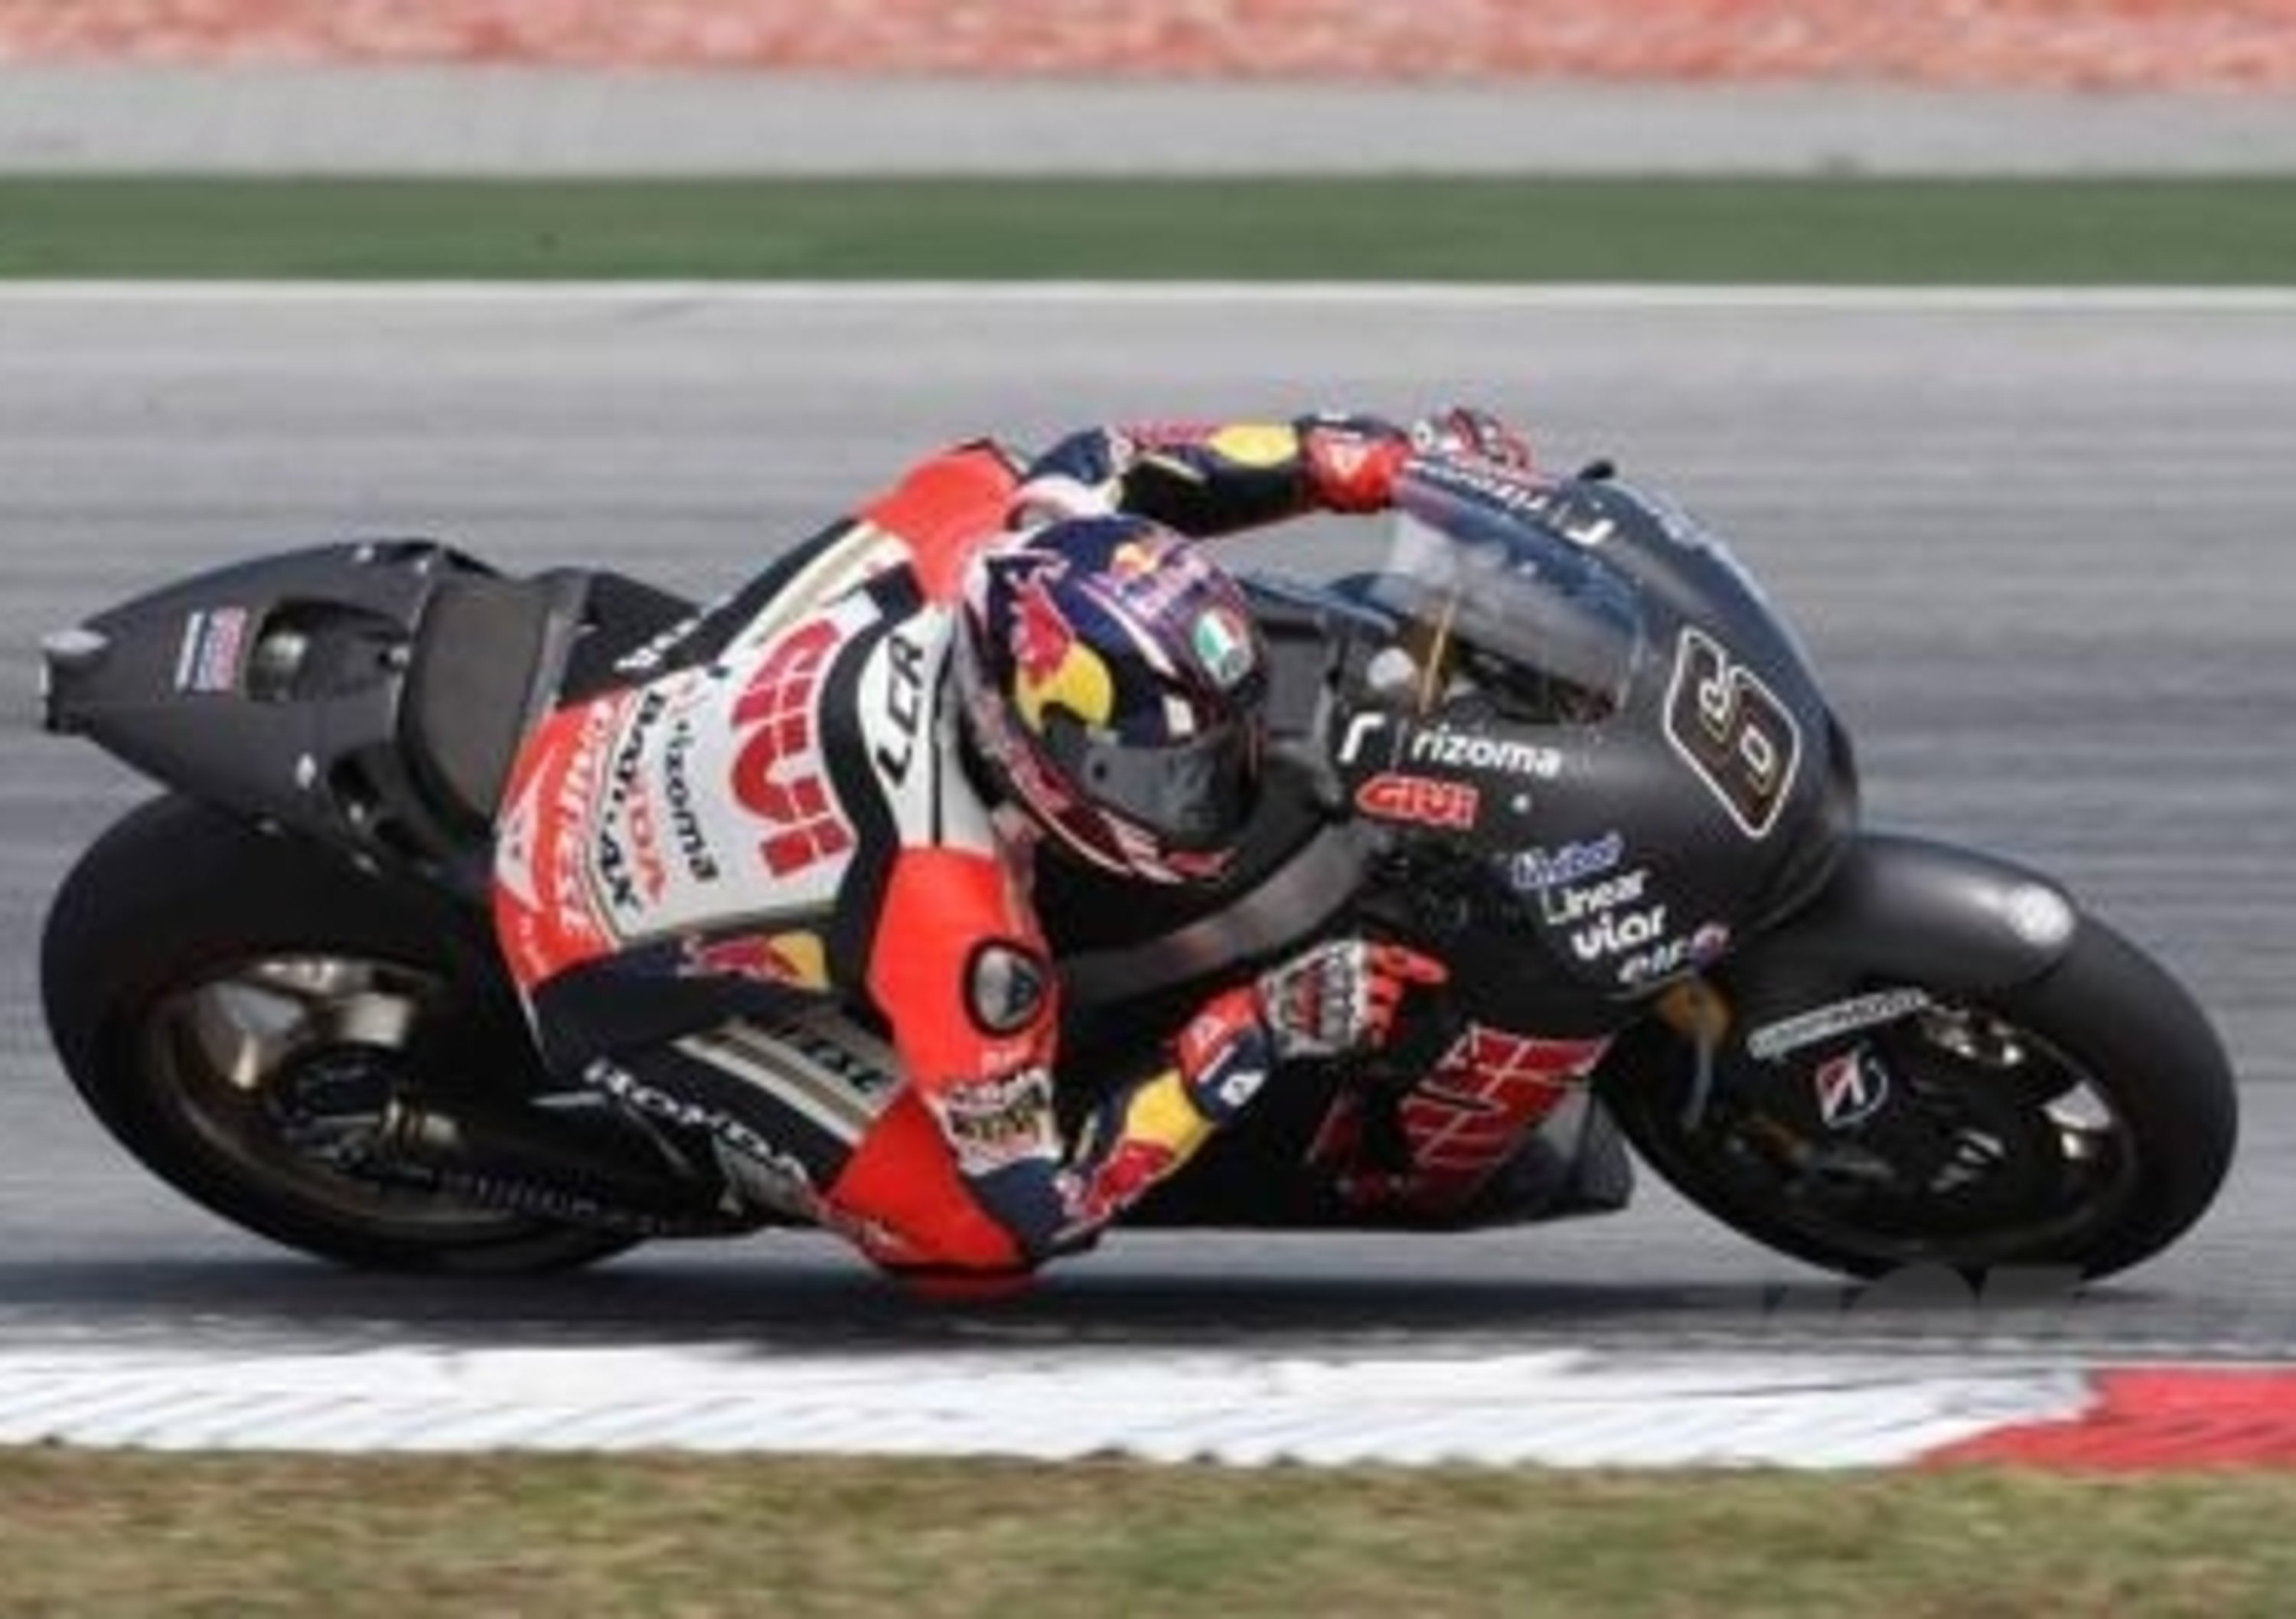 MotoGP: al via gli ultimi test in Qatar